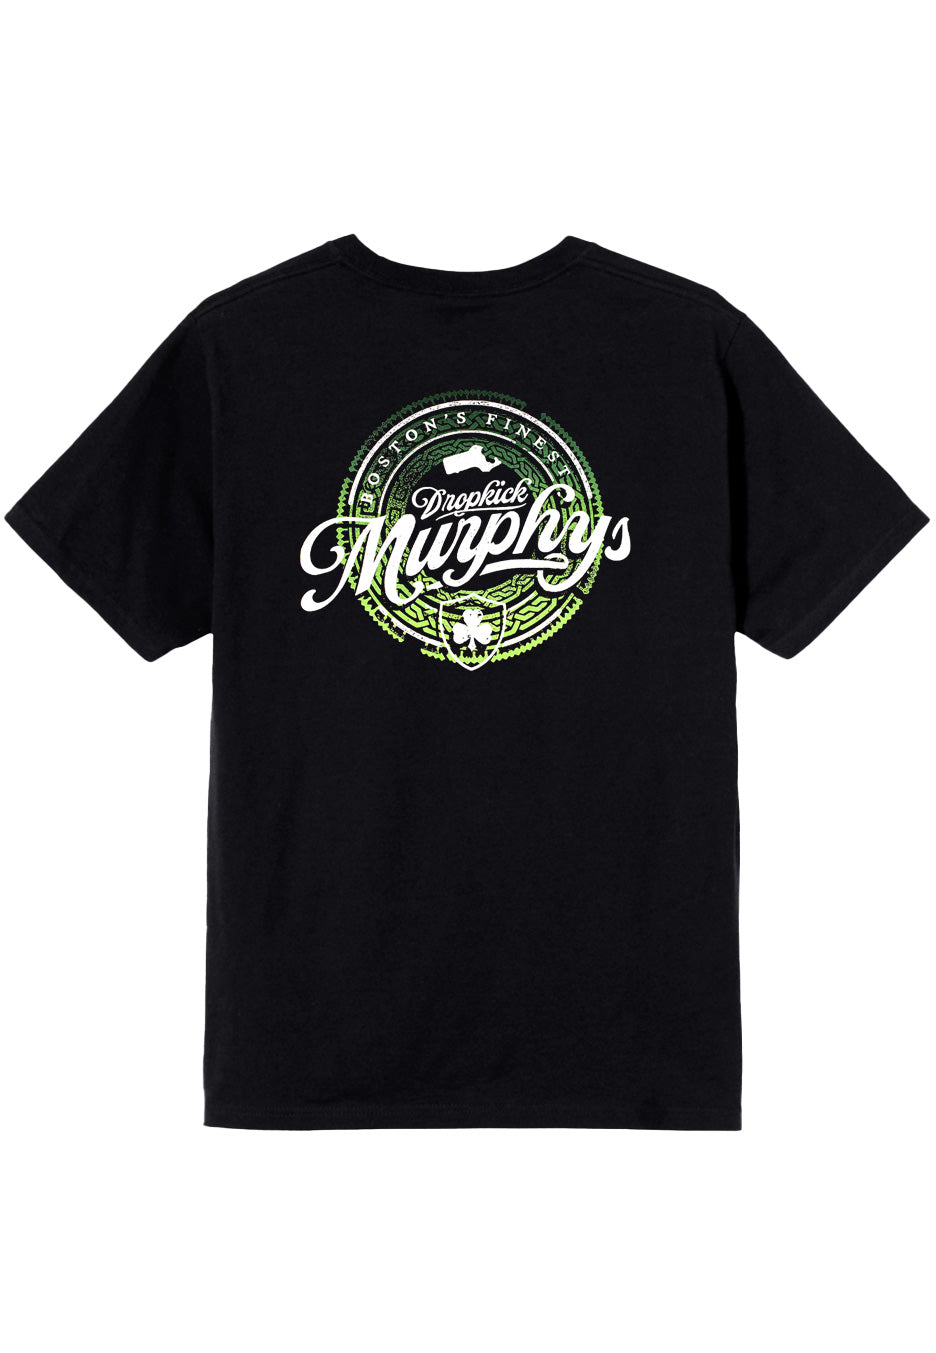 Dropkick Murphys - Bostons Finest - T-Shirt